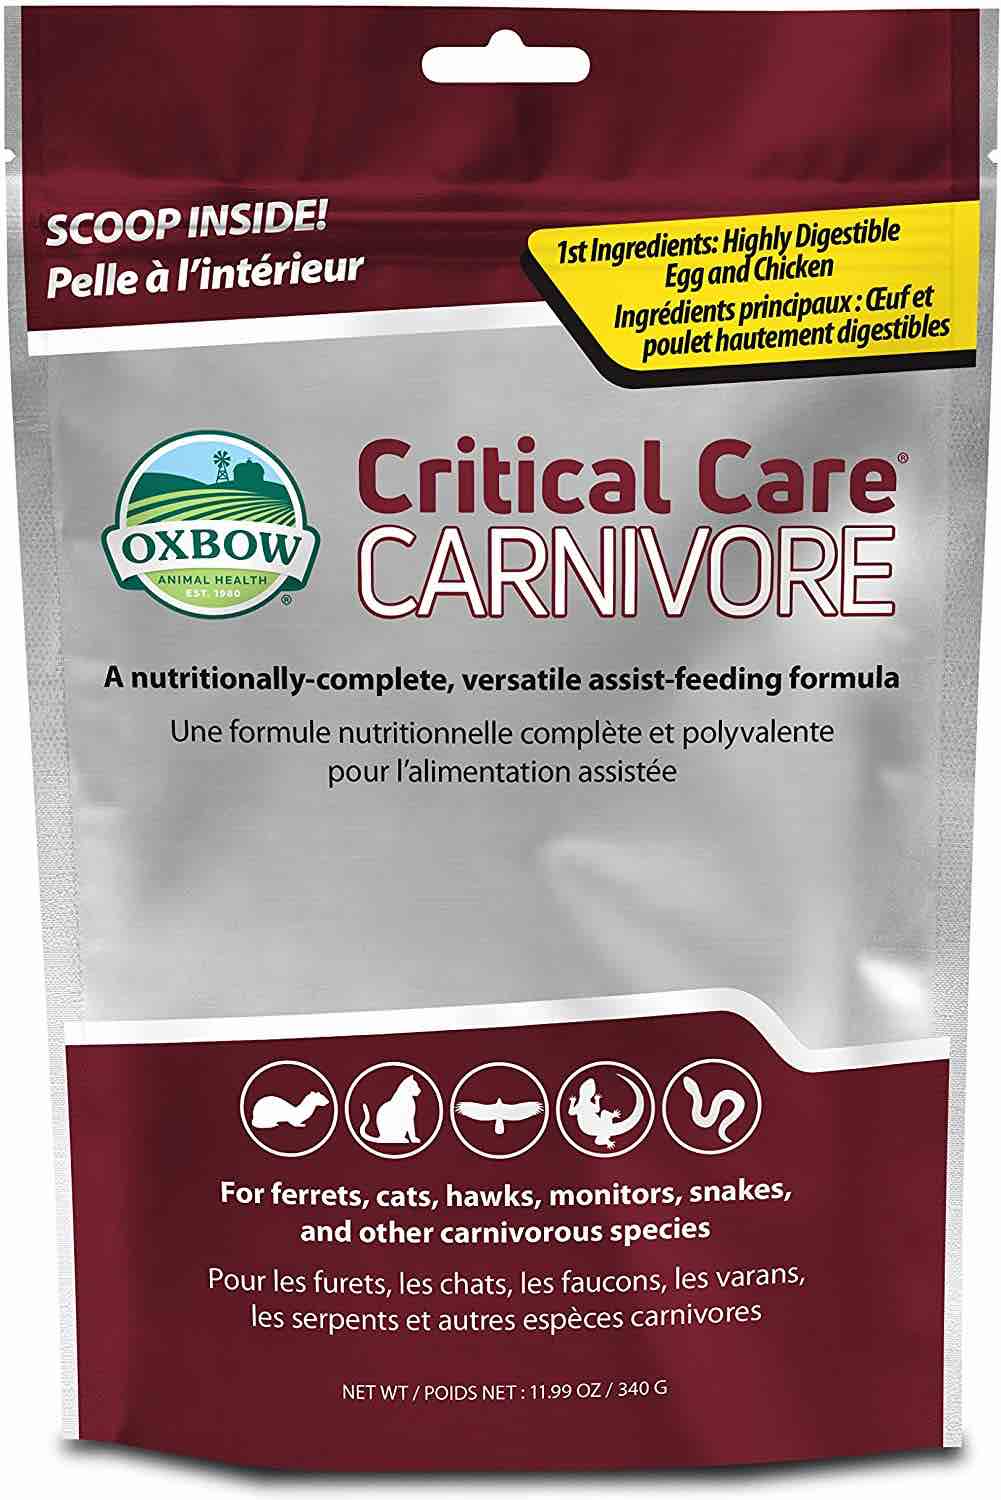 Oxbow Critical Care Carnivore	 11.99 oz (340 g) bag 1